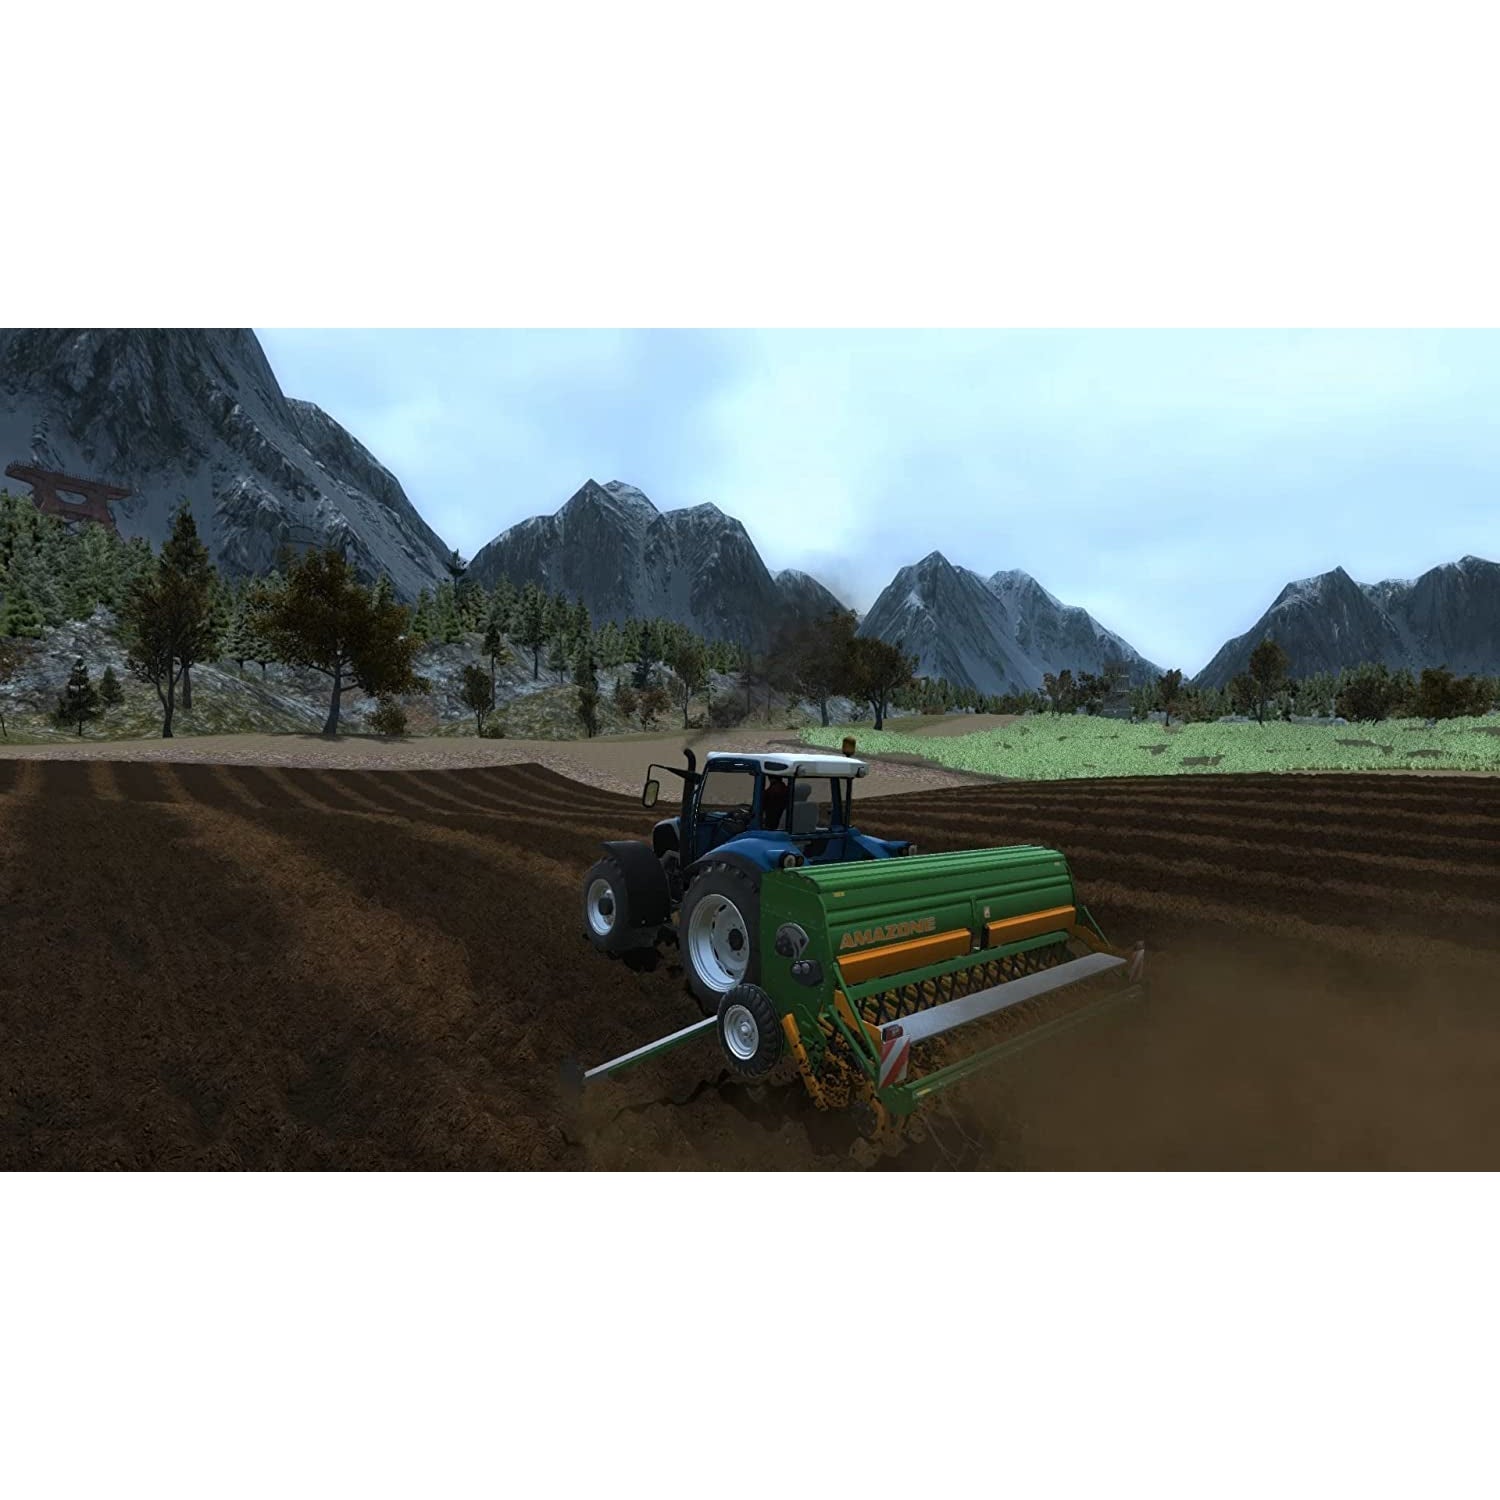 Professional Farmer 2017 (PC DVD)